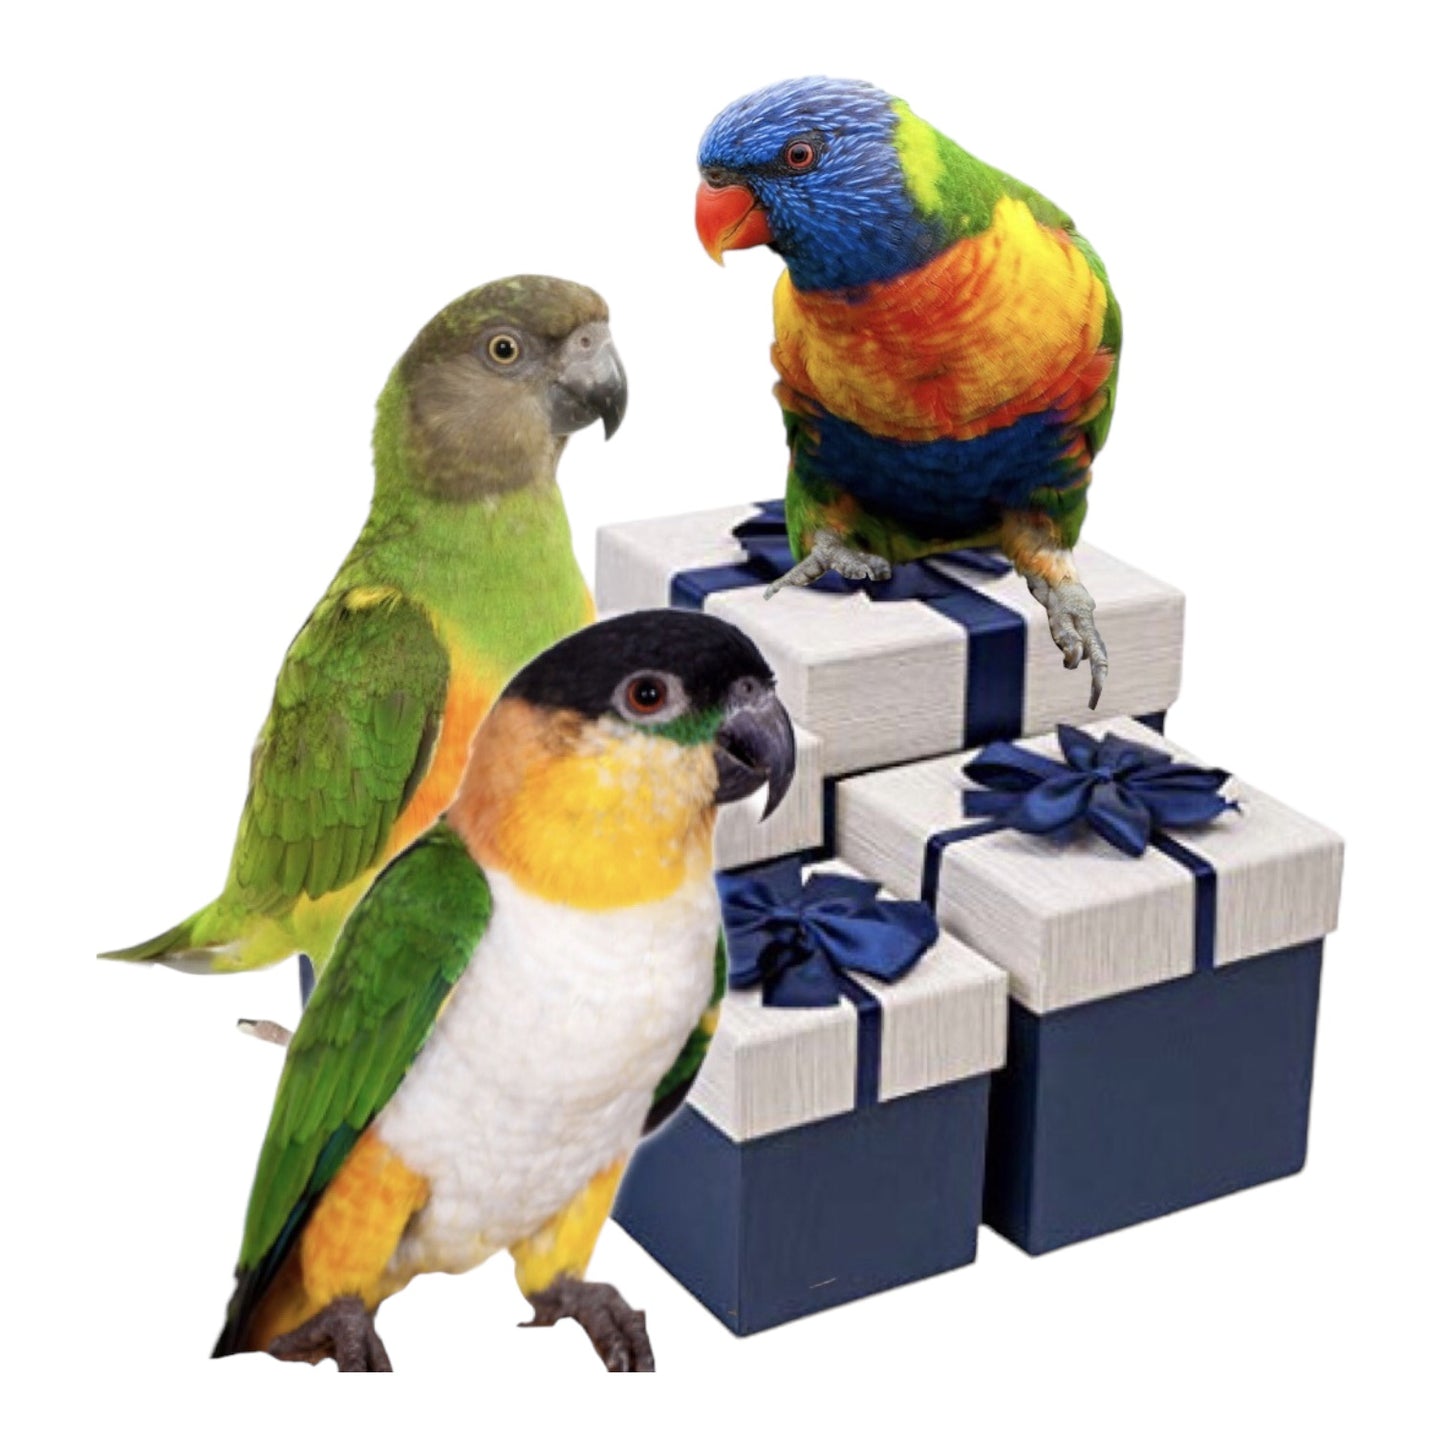 Maand box small, alleen speeltjes - Parrot and Bird Supplies